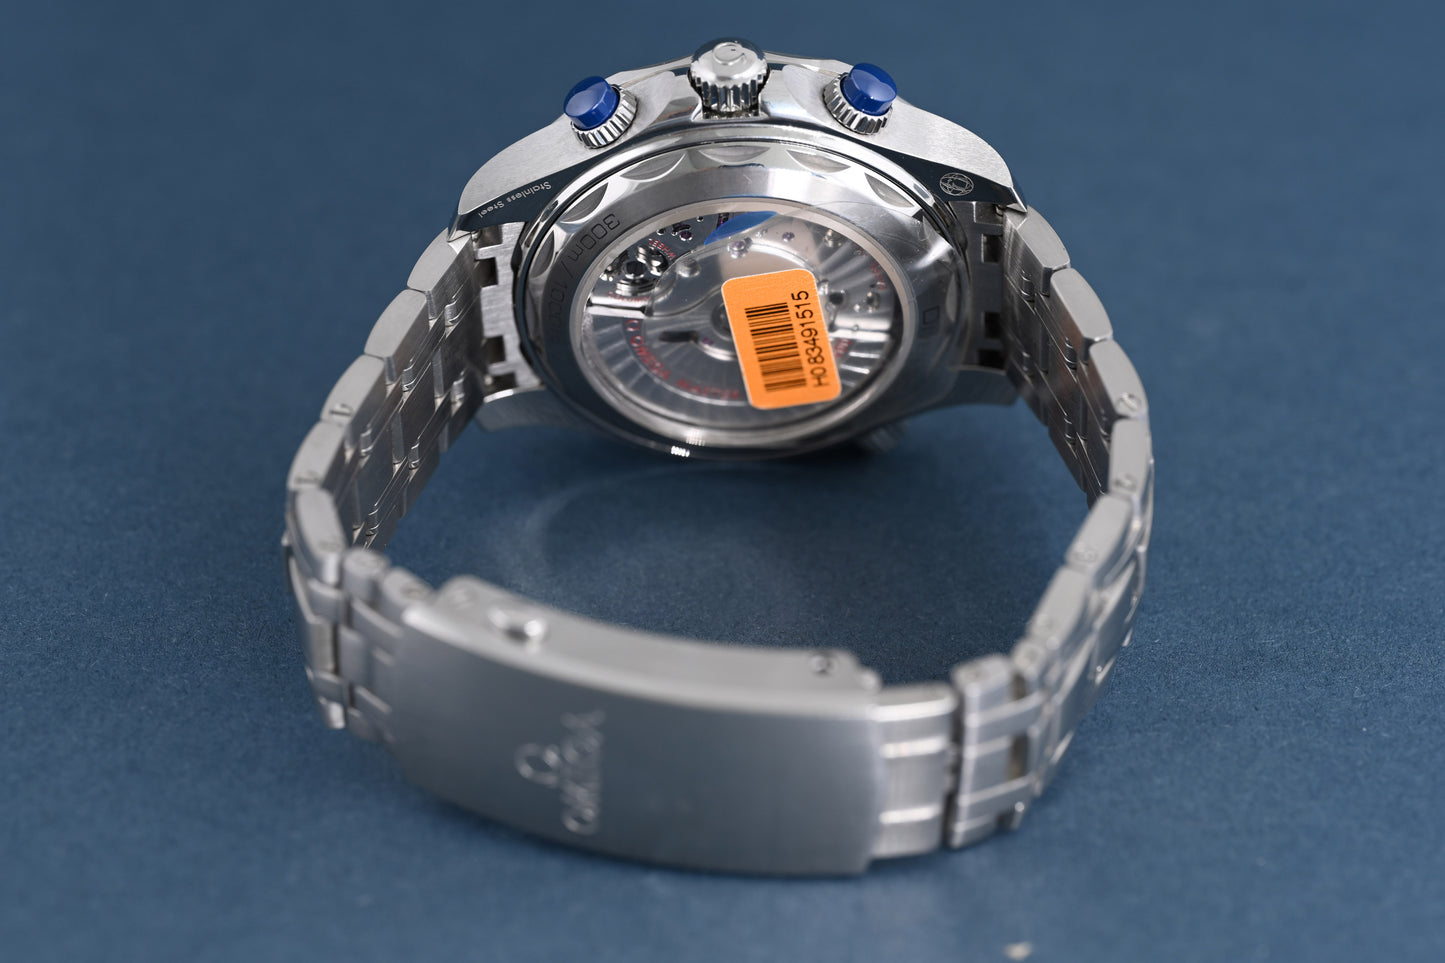 Omega Seamaster Diver 300M Chronograph - Full Set